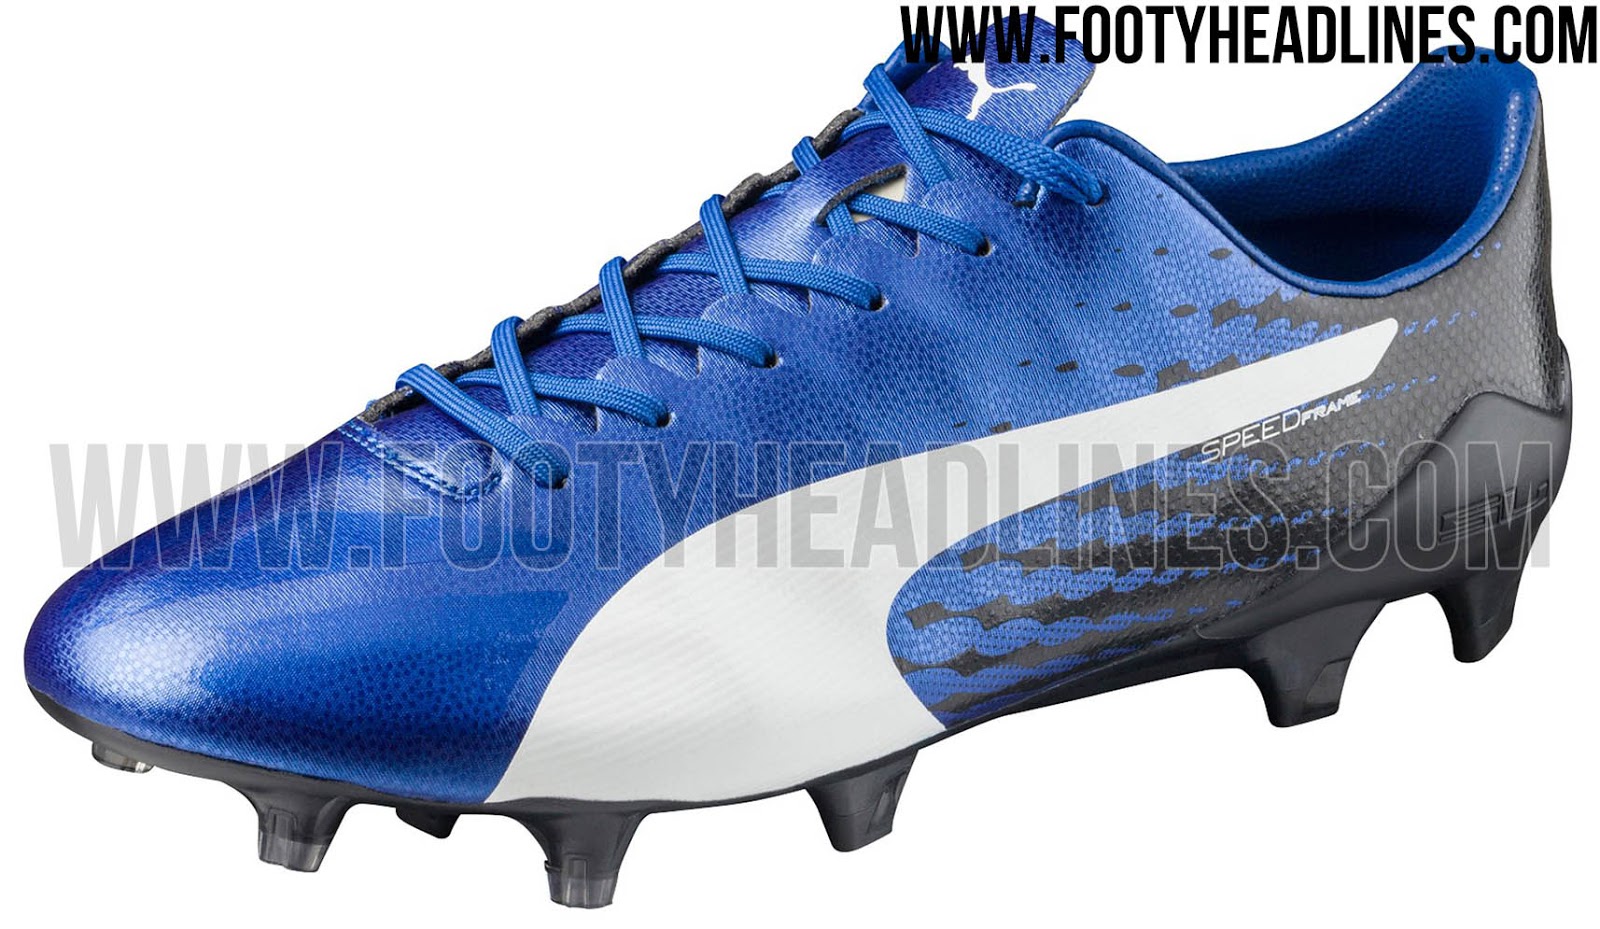 True Blue Puma evoSPEED SL Boots Released - Footy Headlines